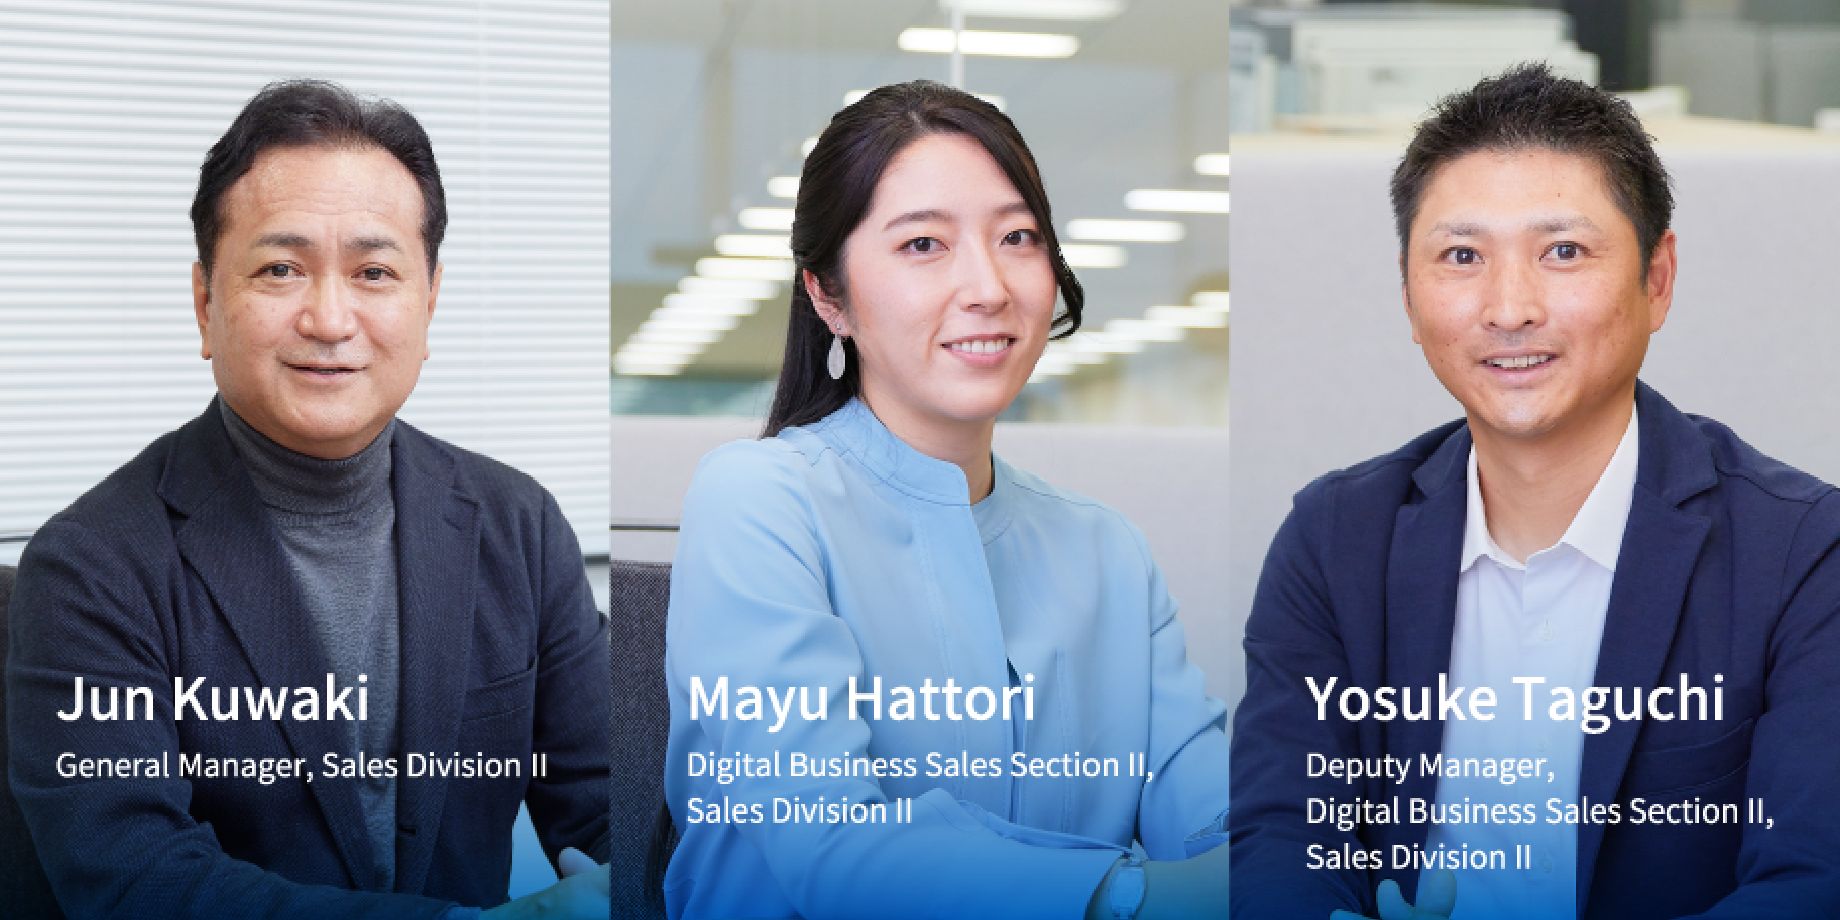 Mayu Hattori from Fujitsu and Yosuke Taguchi from Tokyo Century. We also interviewed Jun Kuwaki, General Manager of Sales Division II